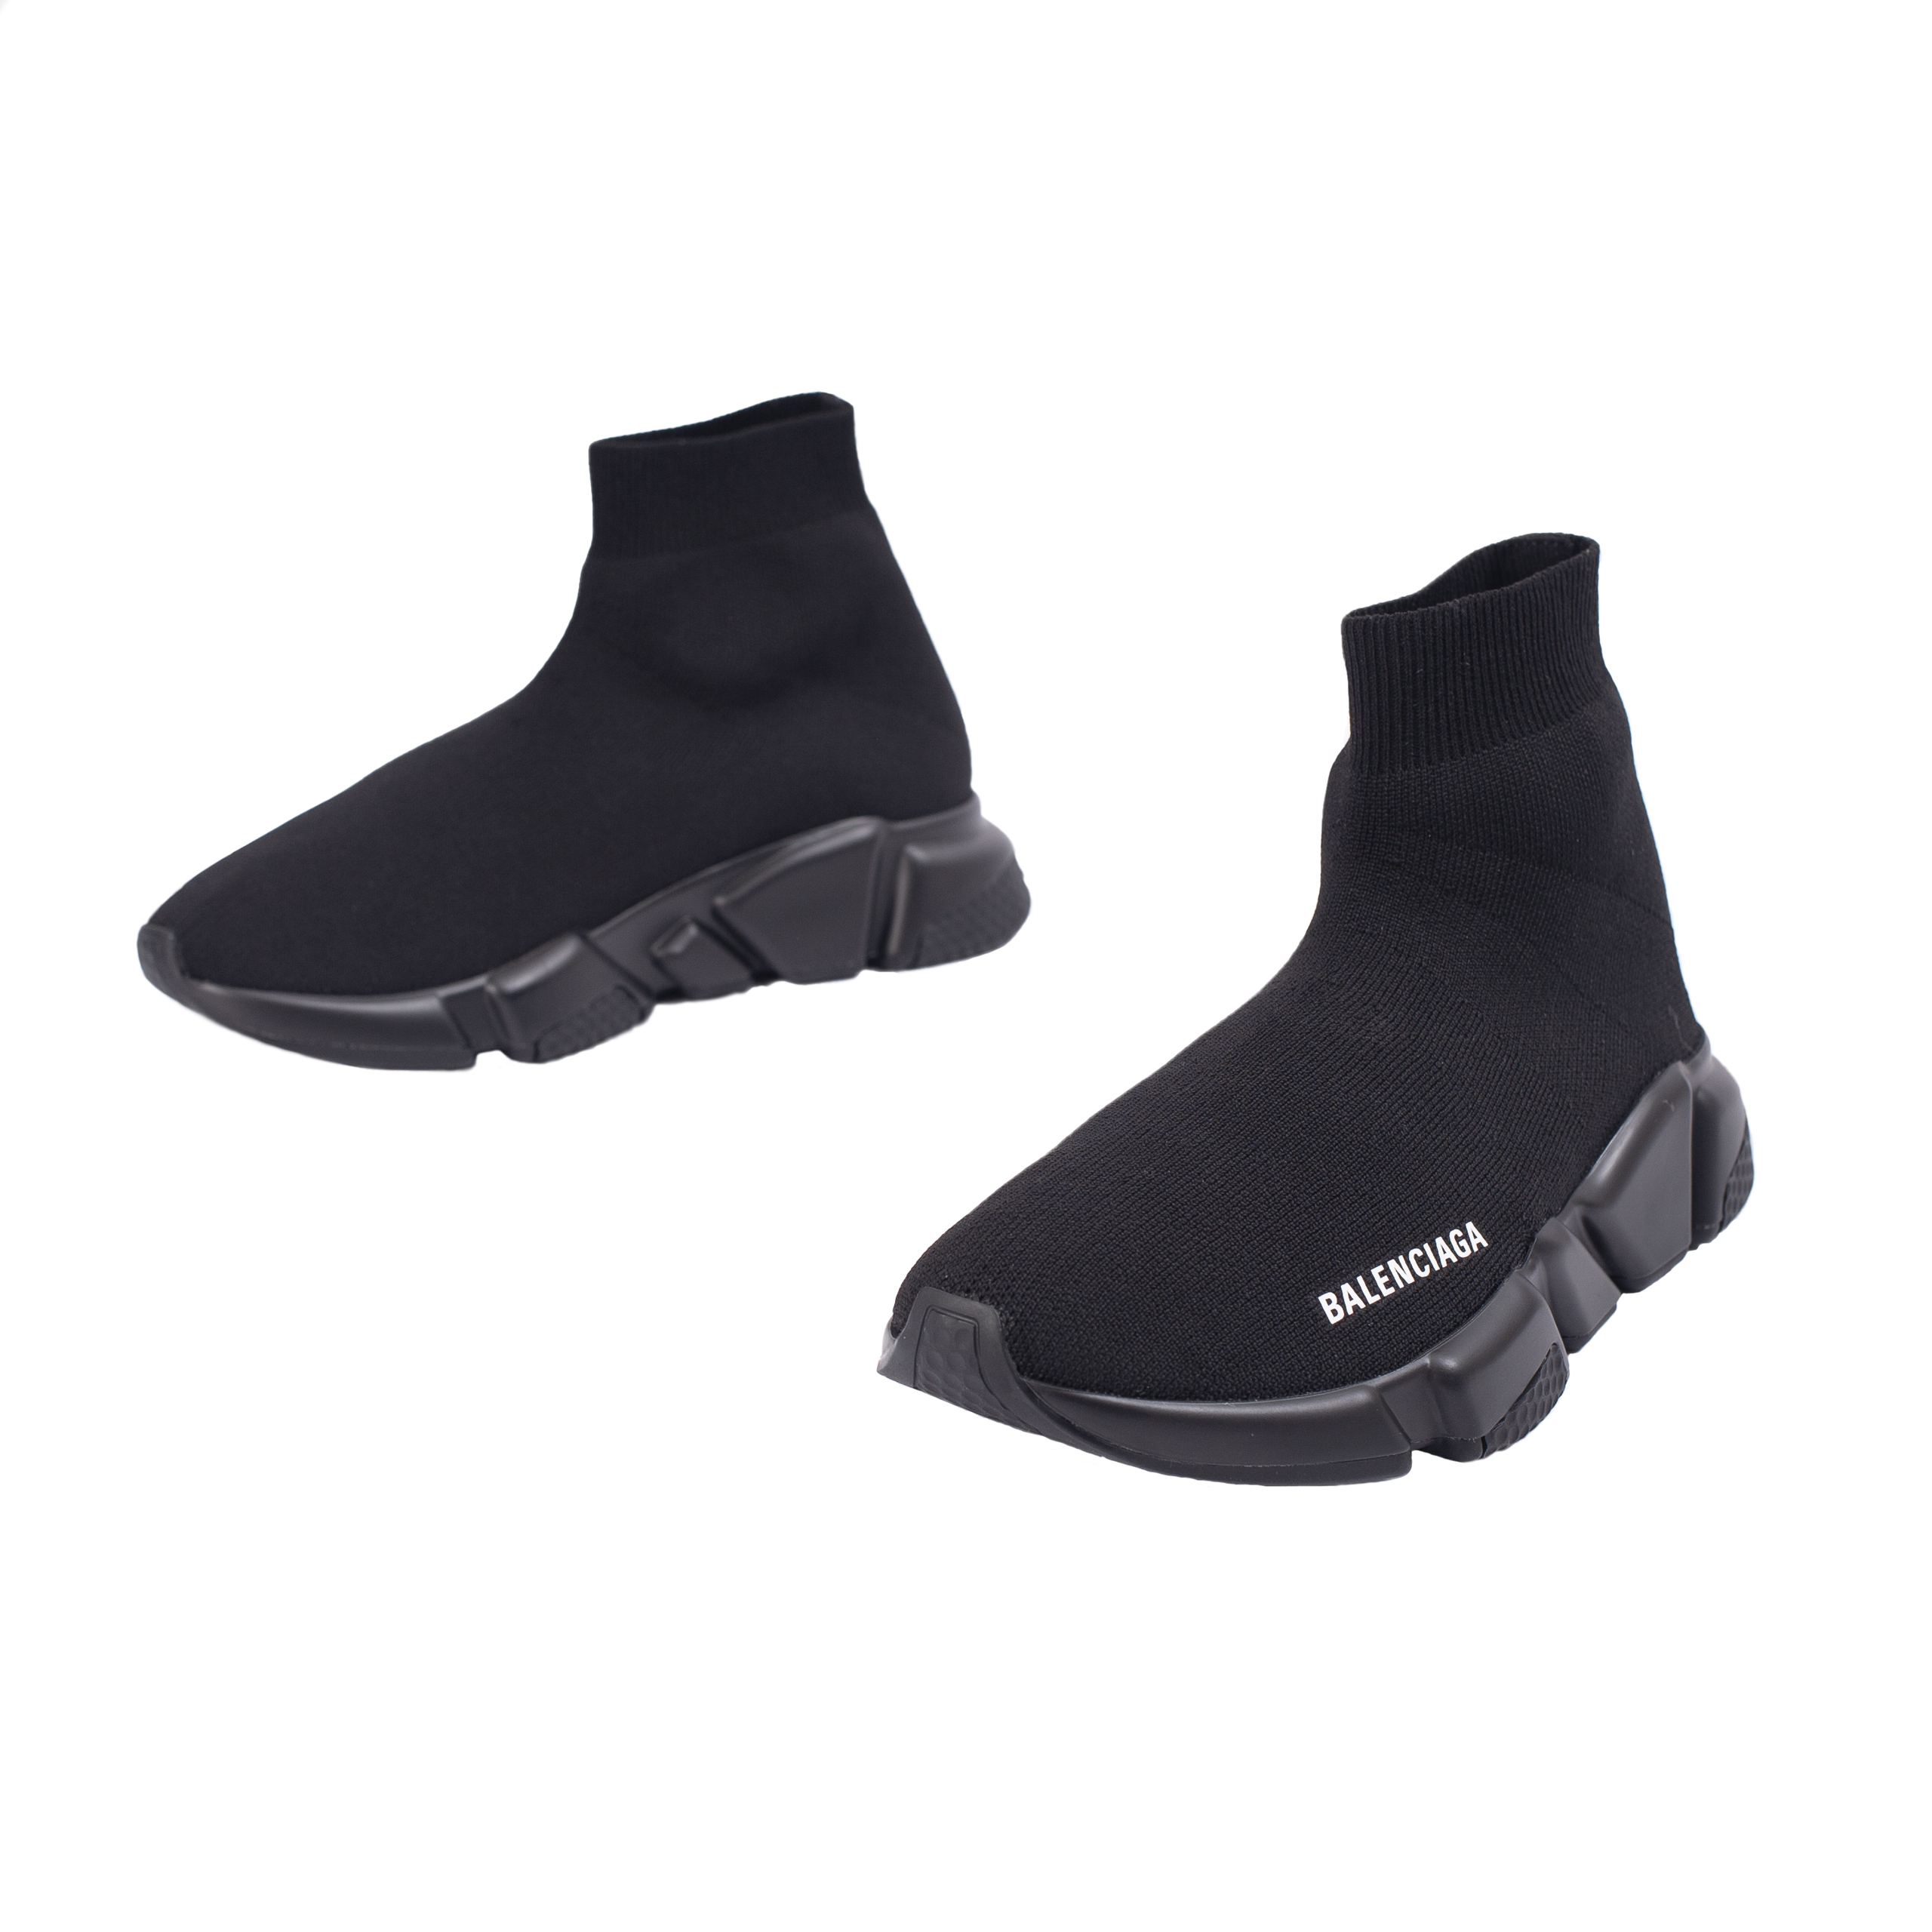 Черные кроссовки Speed 2.0 - Balenciaga 617239/W2DB1/1013 Фото 5